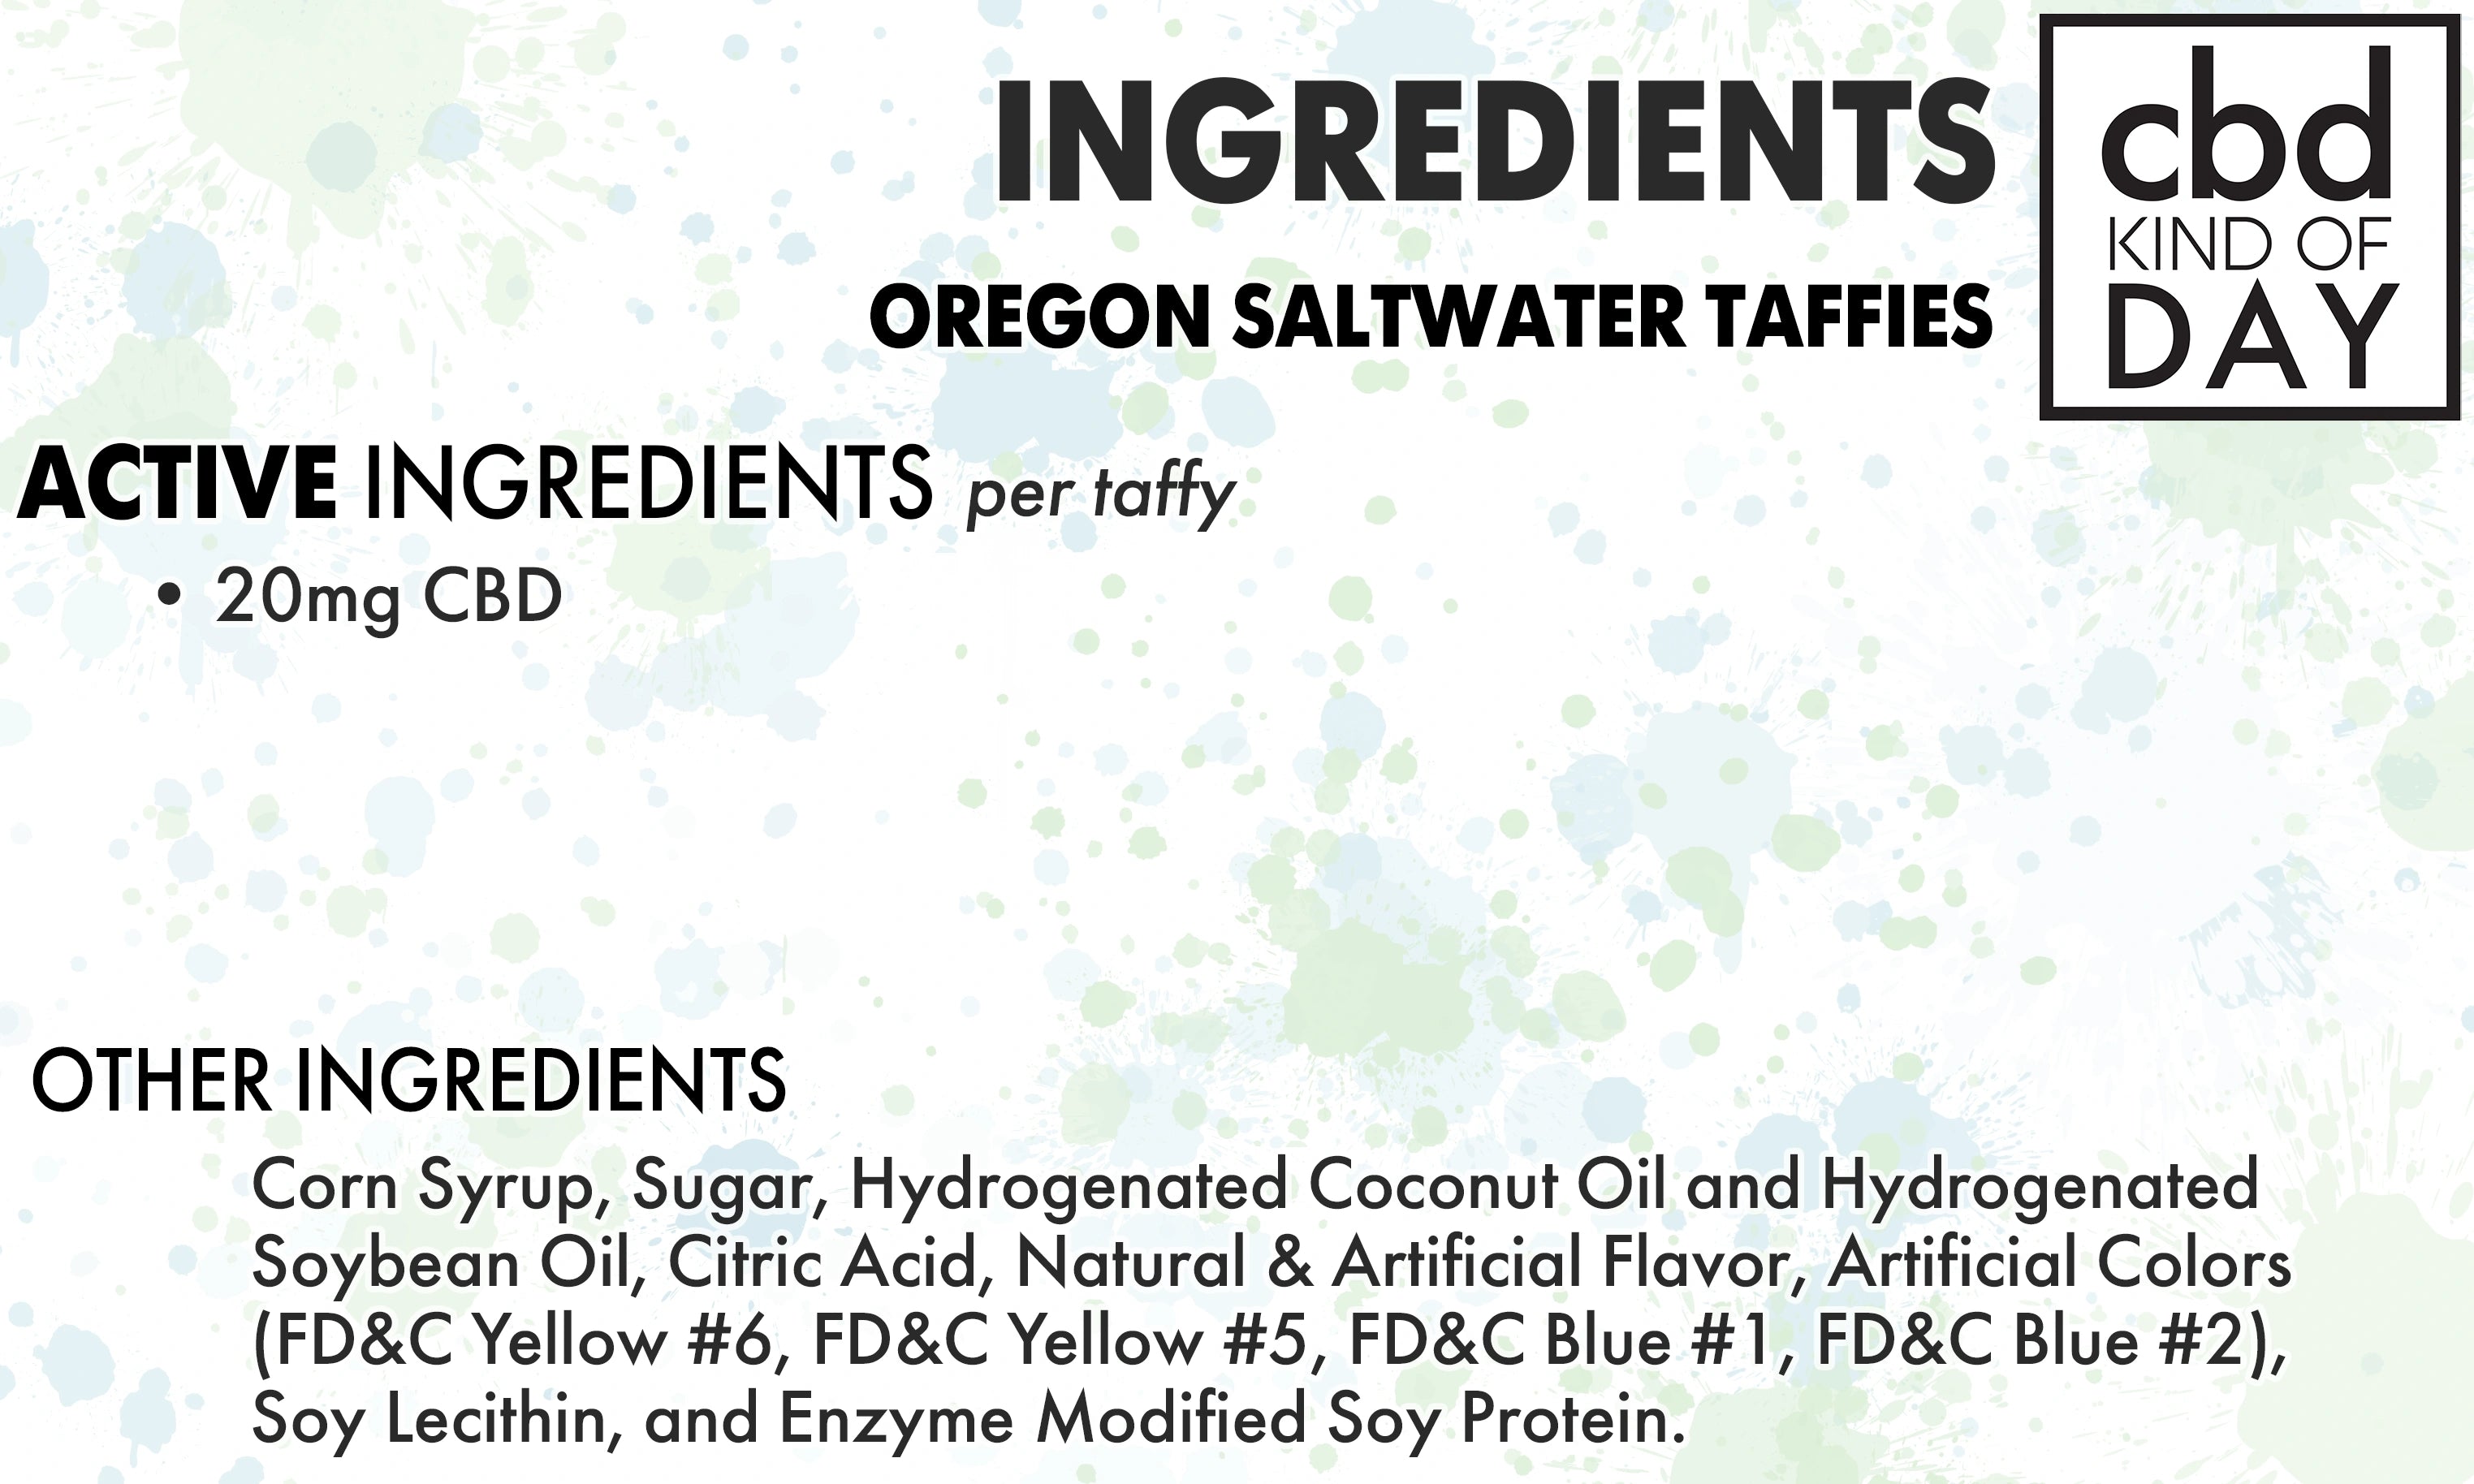 Oregon Saltwater Taffies